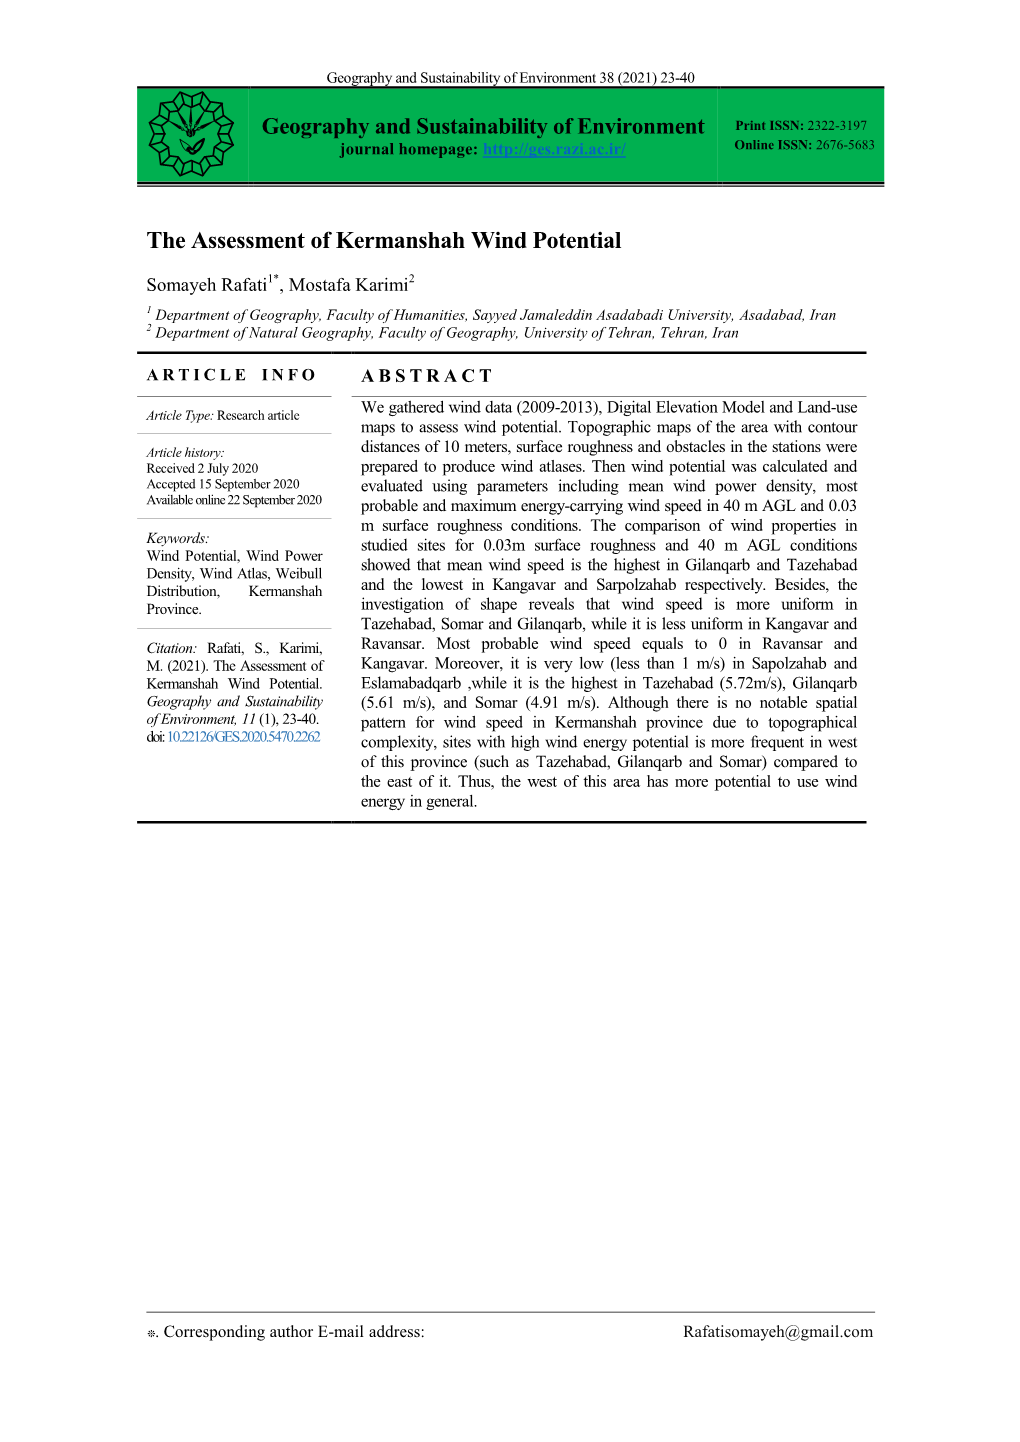 The Assessment of Kermanshah Wind Potential